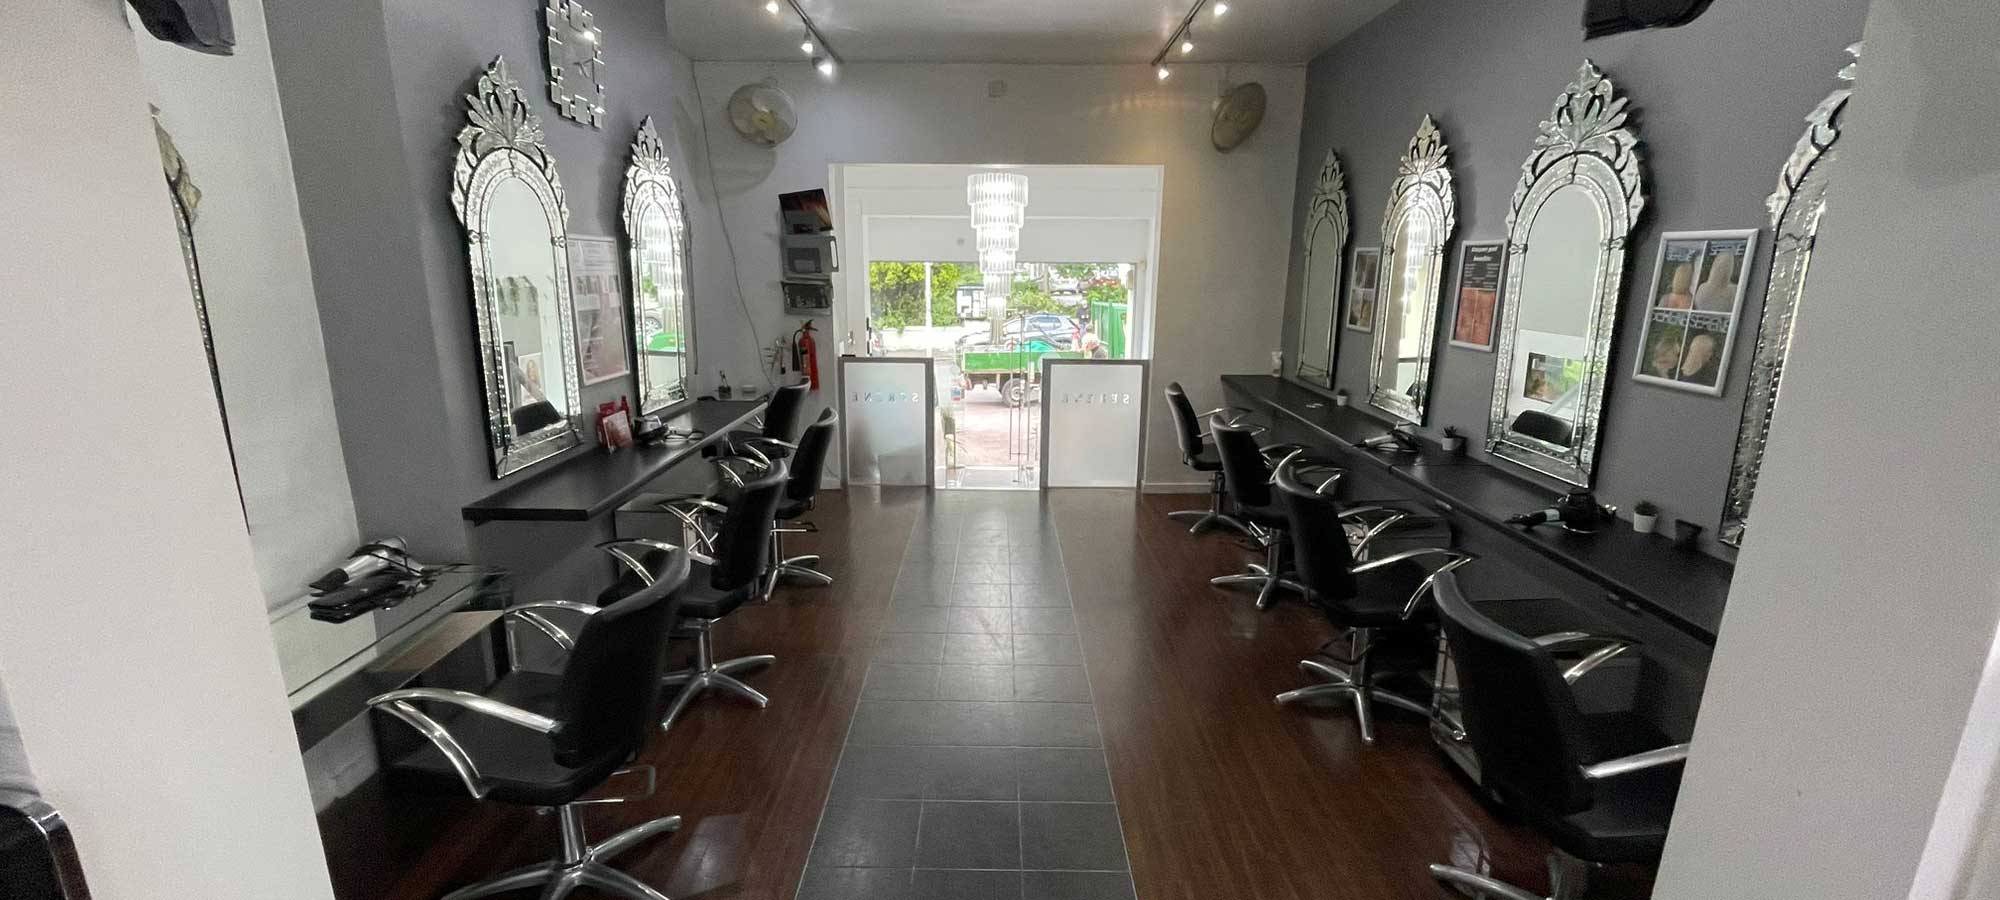 Inside our beautiful salon in Broadstairs